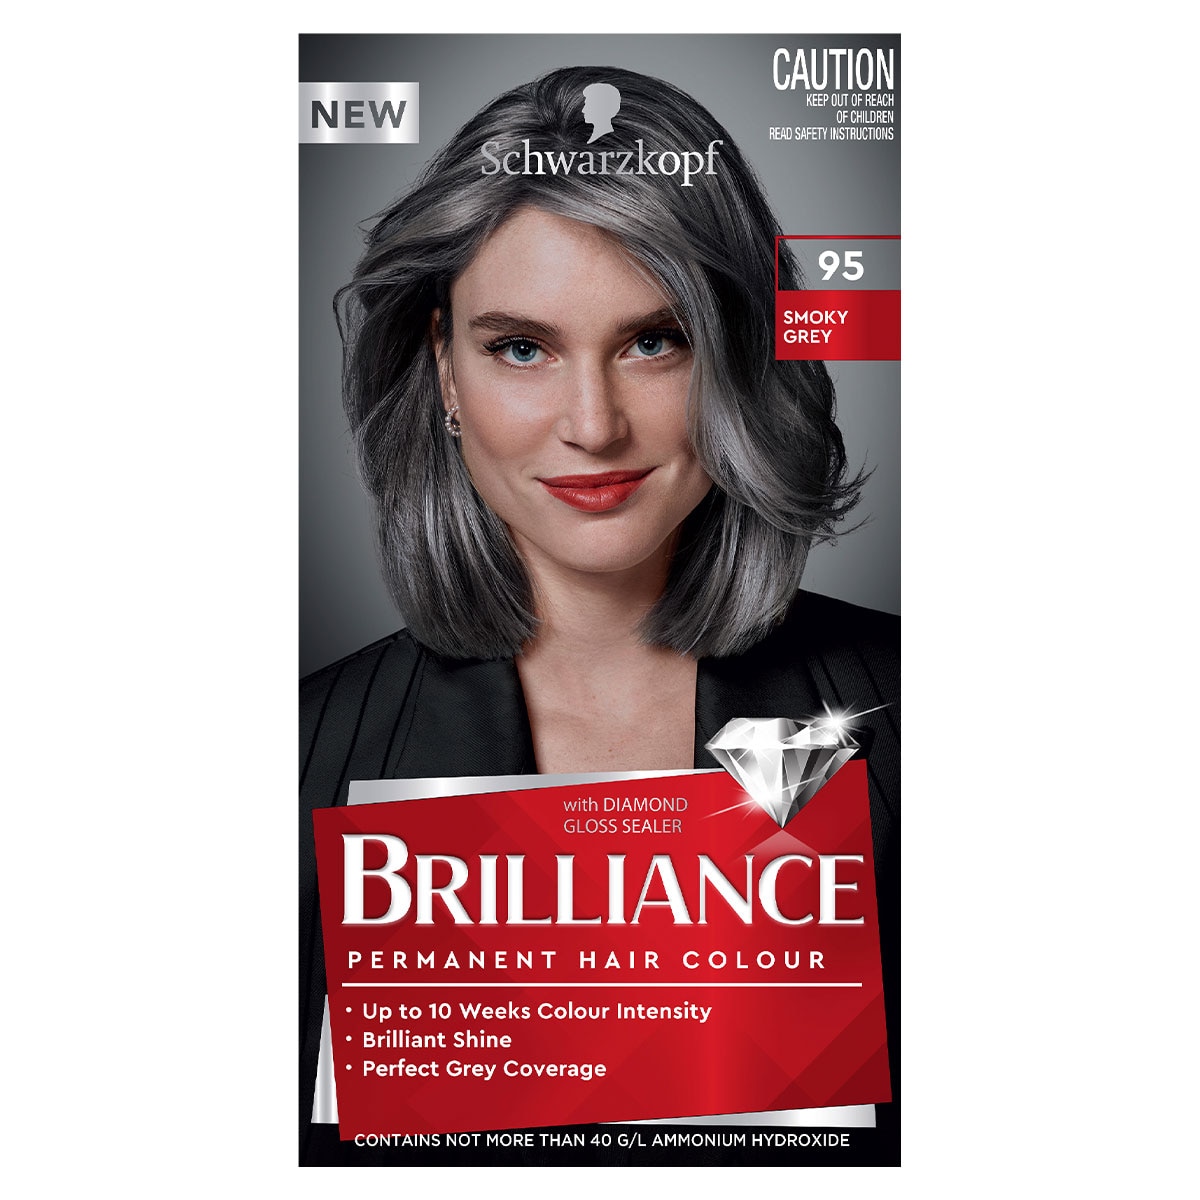 Schwarzkopf Brilliance Permanent Hair Colour 95 Smoky Grey